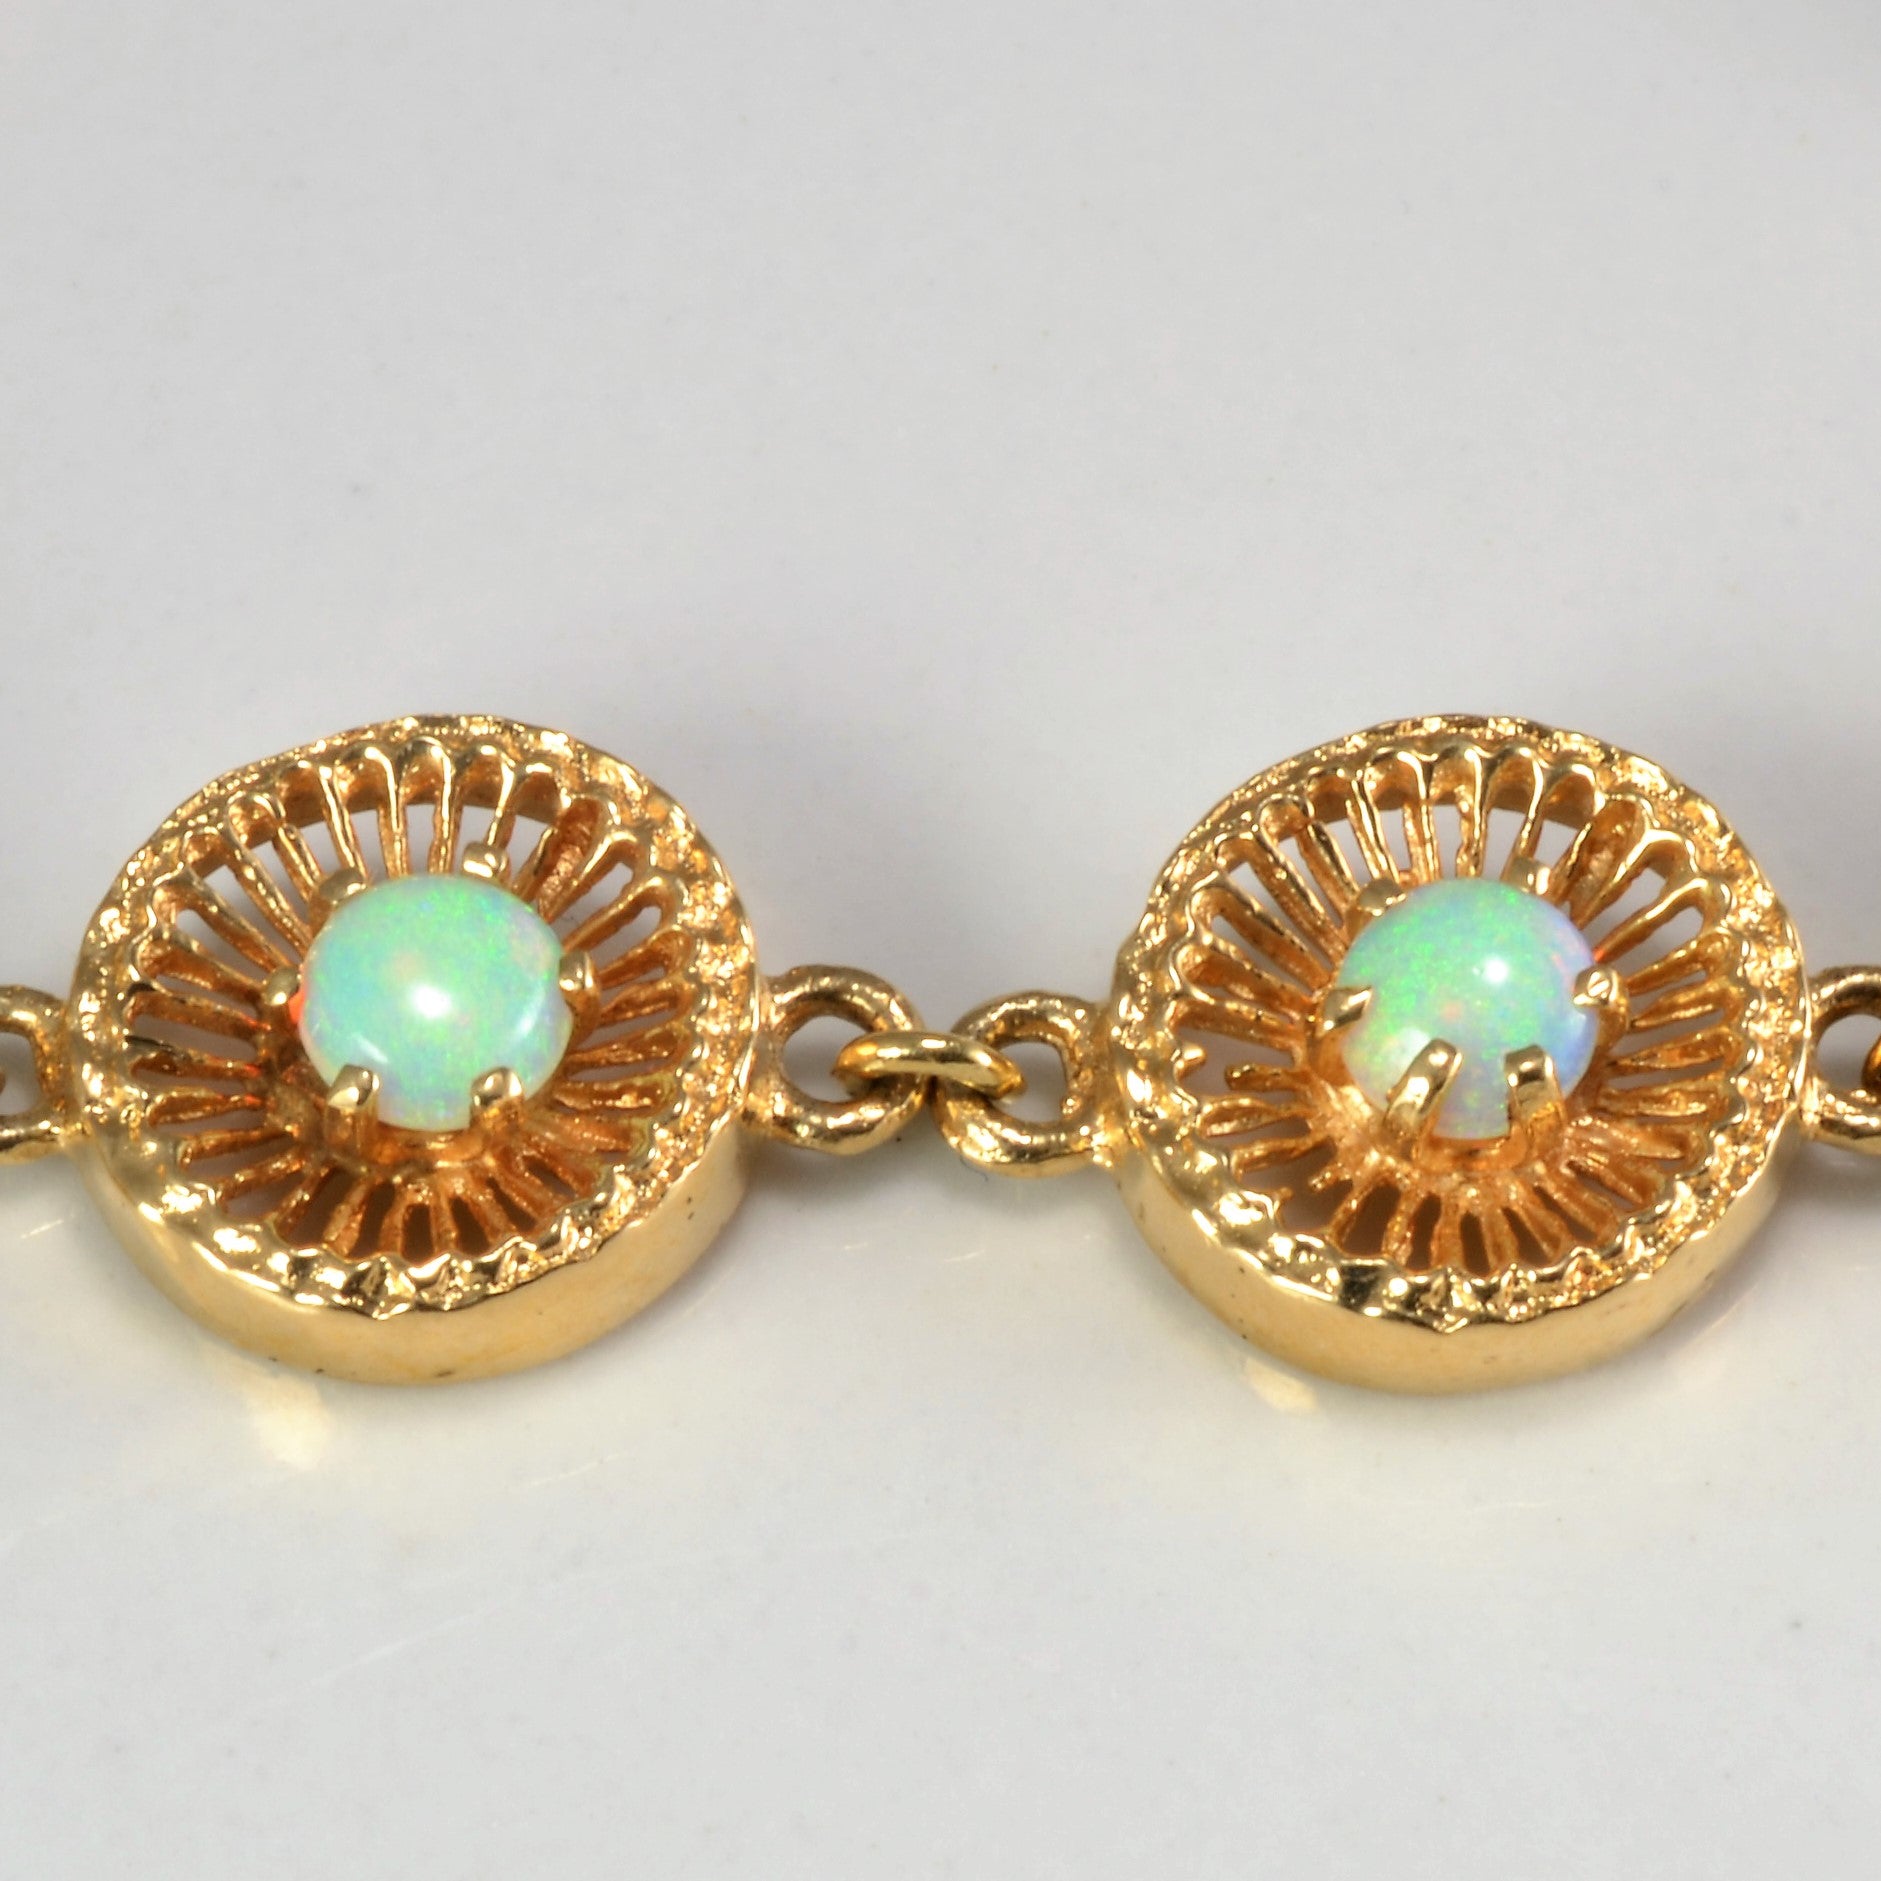 Vintage Opal Chain Bracelet | 7''|